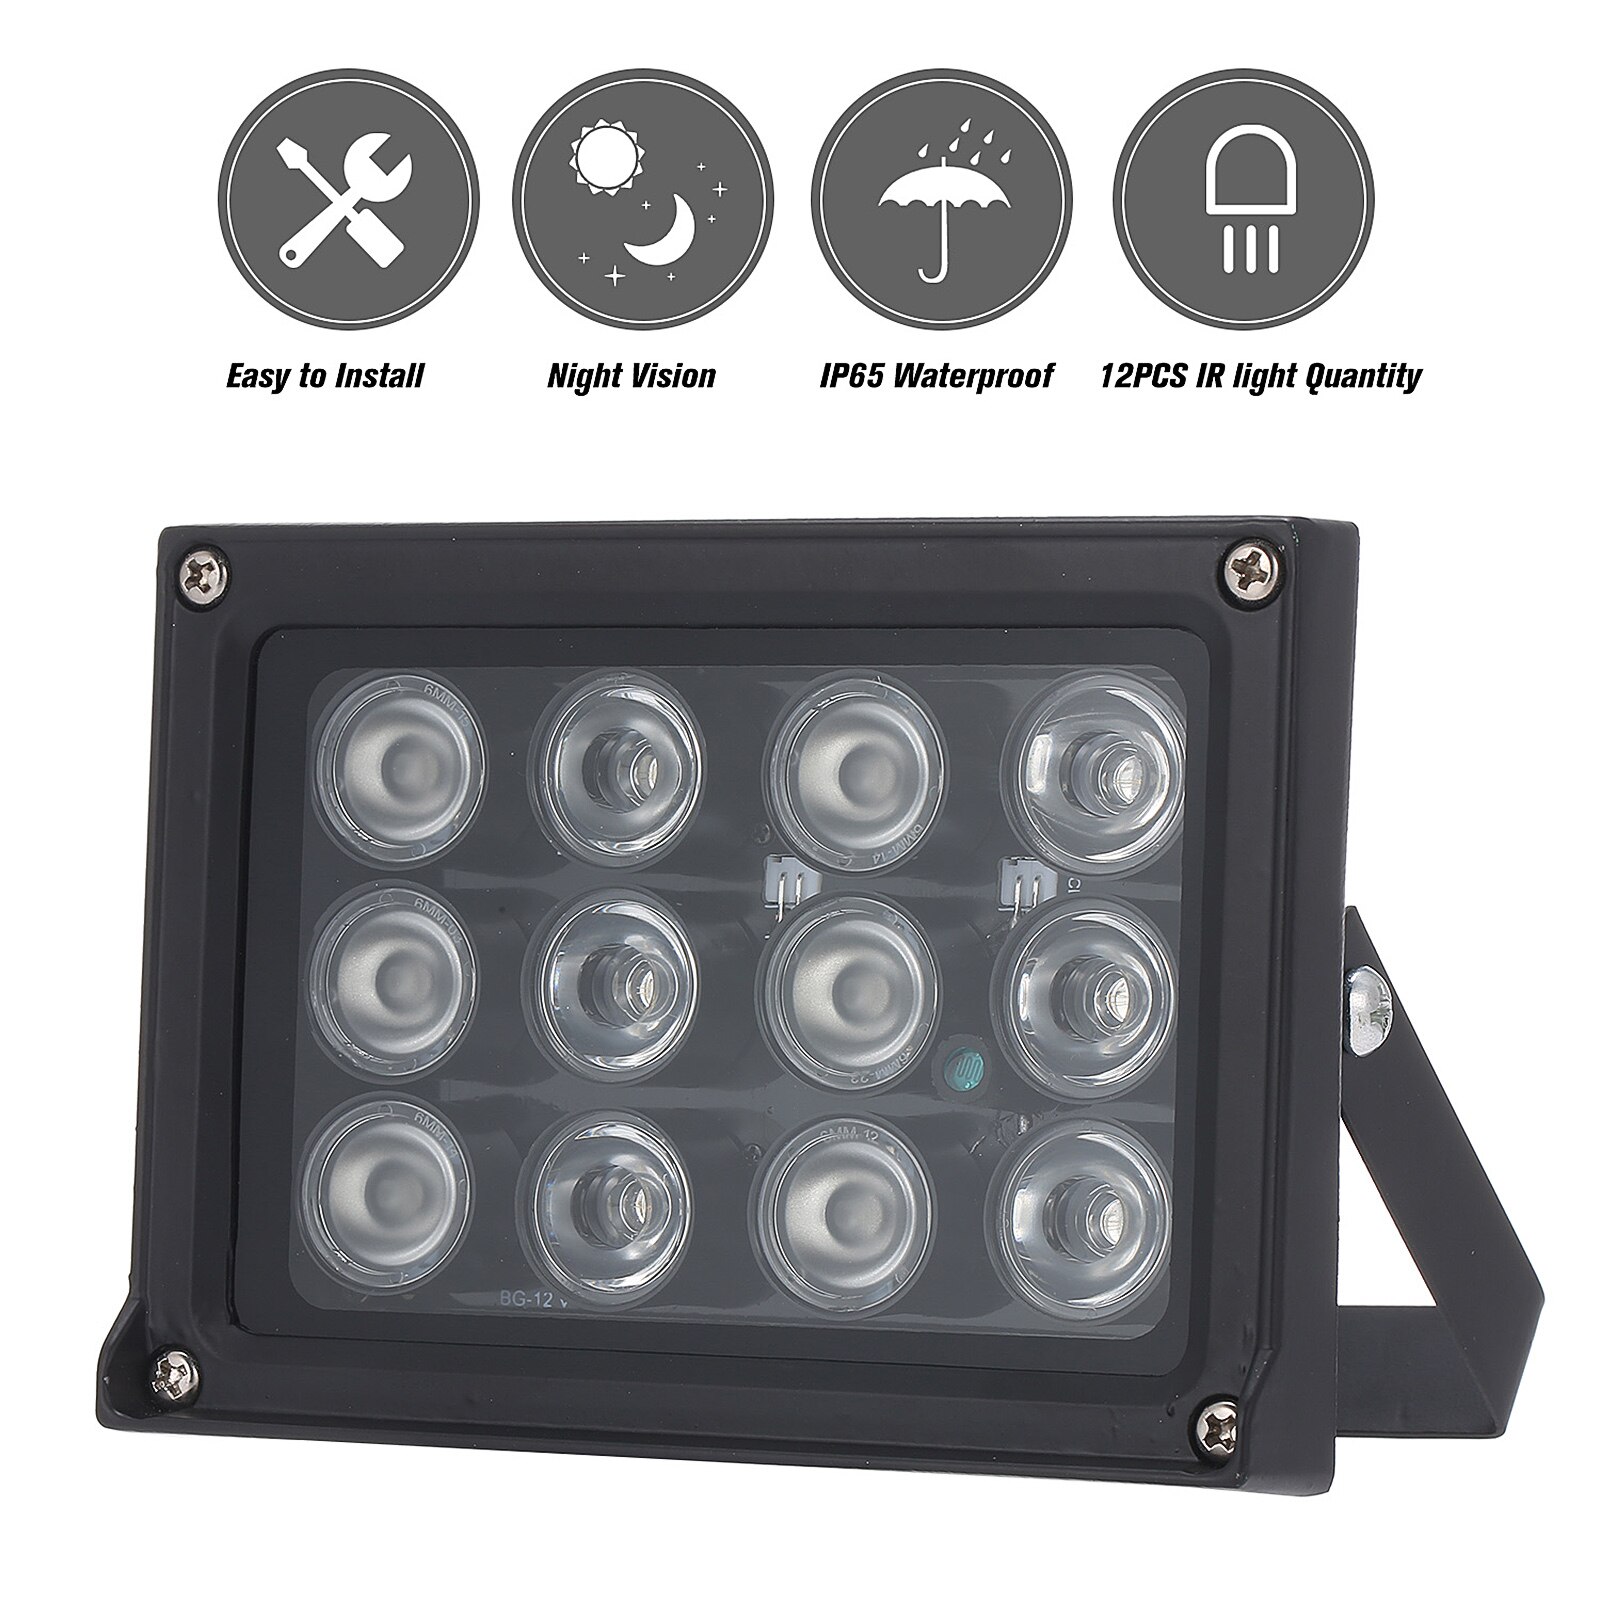 12 LED illuminator Light CCTV 50m IR Infrared Night Vision Auxiliary Lighting Outdoor Waterproof For CCTV Surveillance Camera: Black